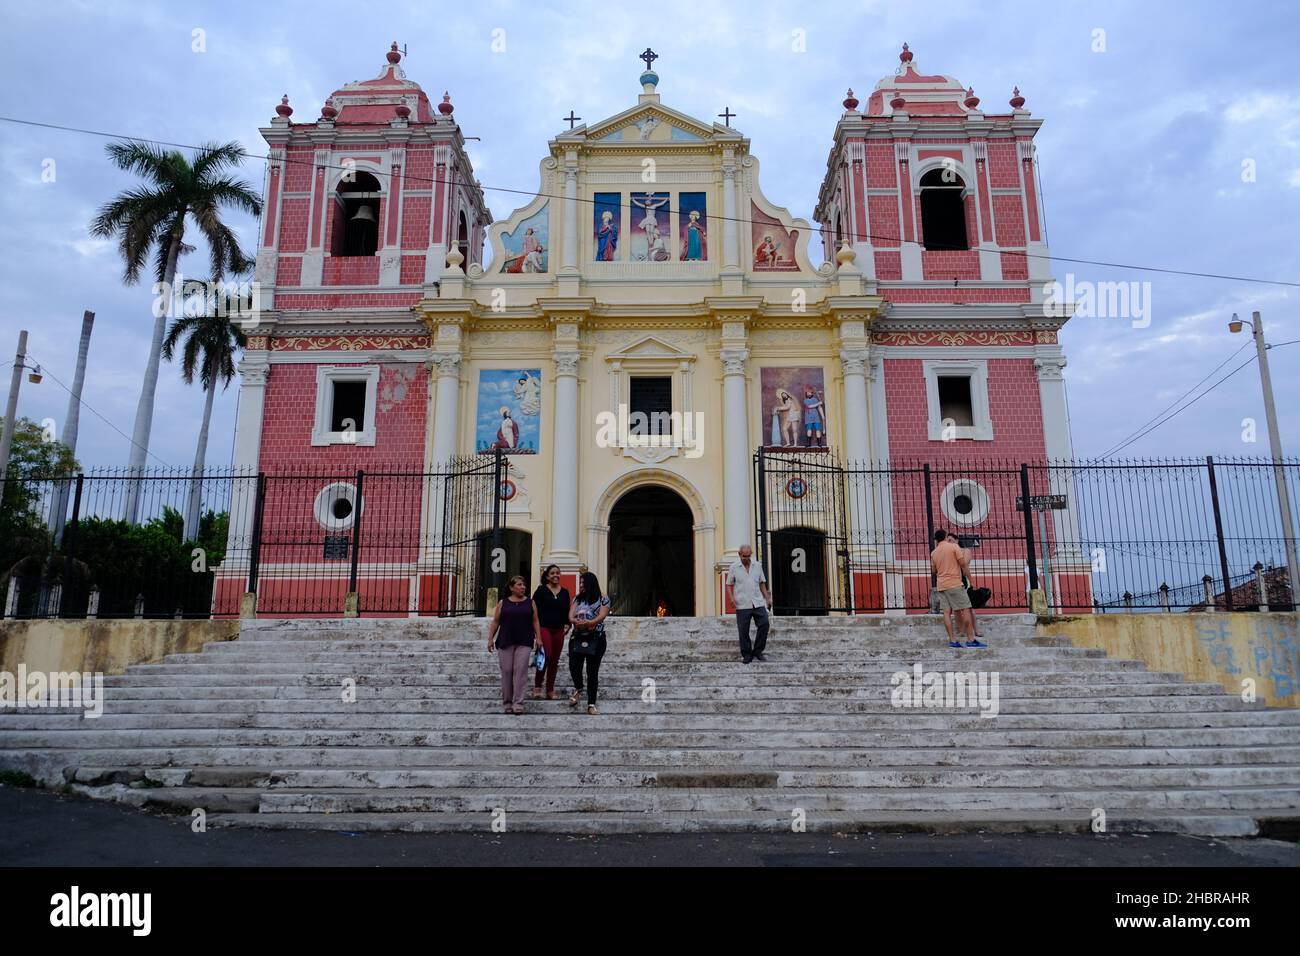 Nicaragua Leon - Chiesa del Calvario - dolce Nome di Gesù - Iglesia El Calvario Foto Stock